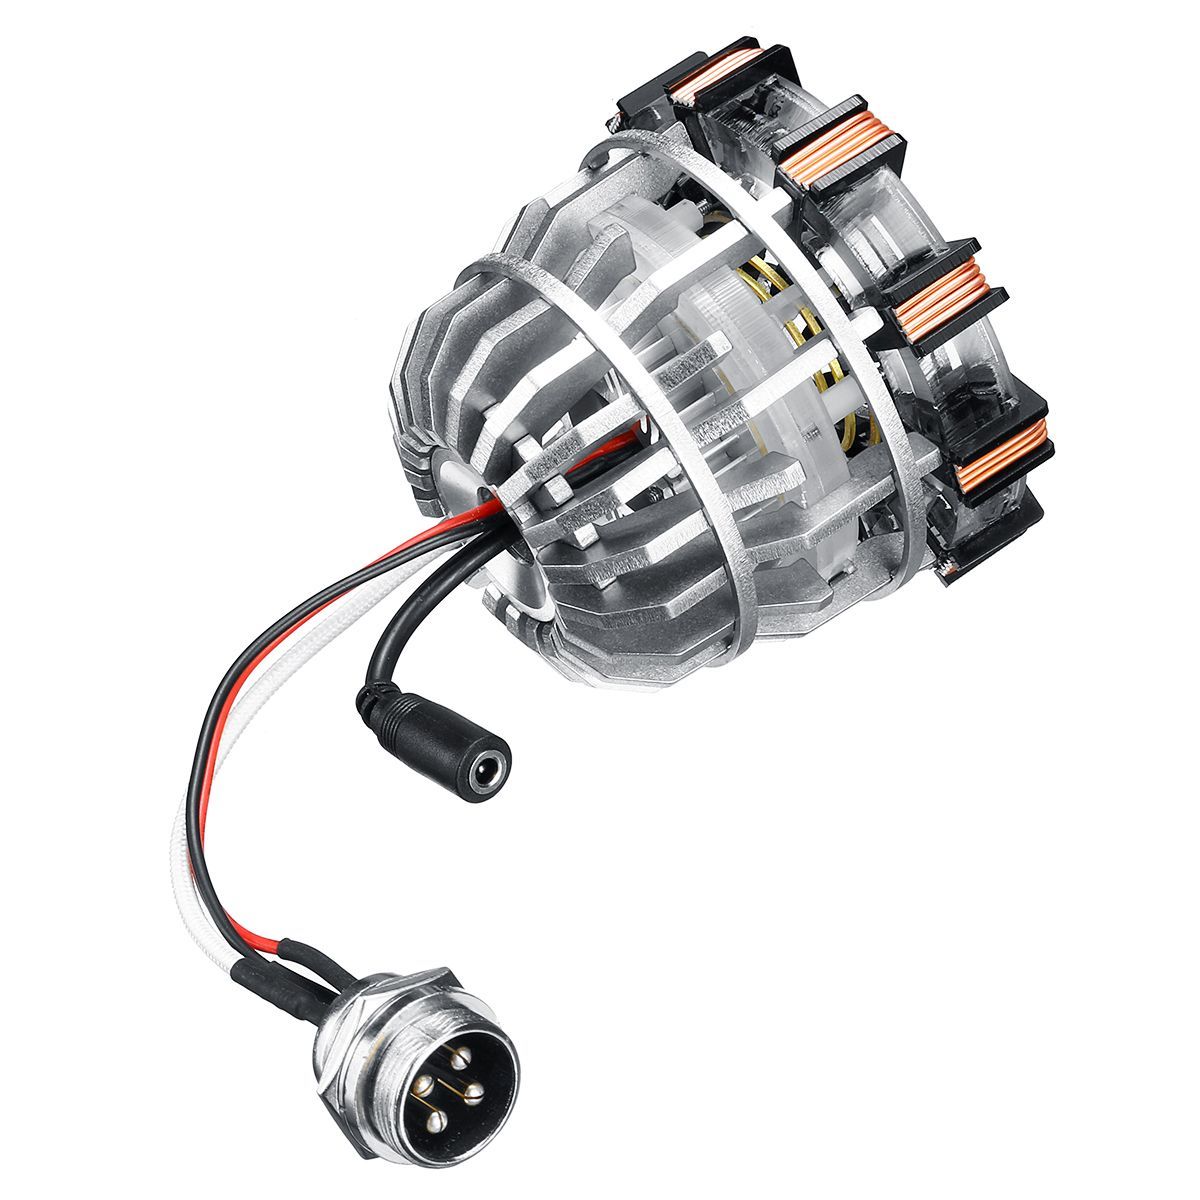 MK2-Stainless-Steel-Remote-Ver-Tony-DIY-Arc-Reactor-Lamp-Kit-Remote-Control-Illuminant-LED-Flash-Lig-1477132